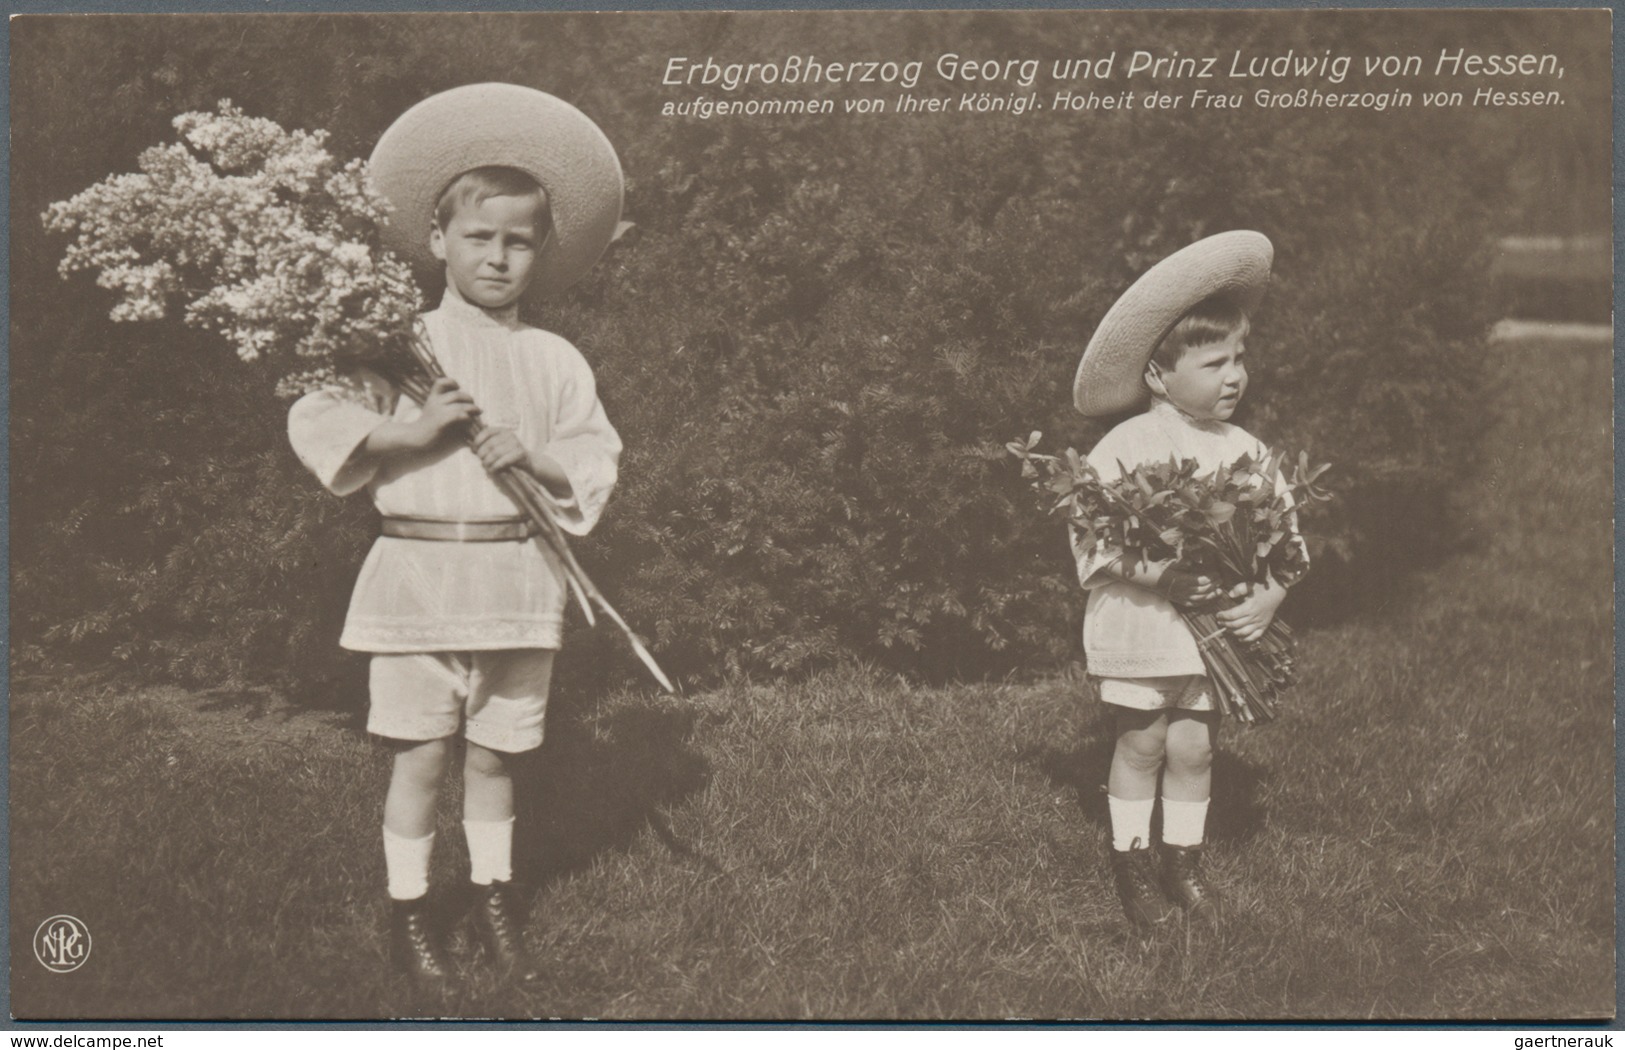 Ansichtskarten: Hessen: ADEL / FLUG, vier historische Ansichtskarten, davon zwei Karten Adel Ernst L